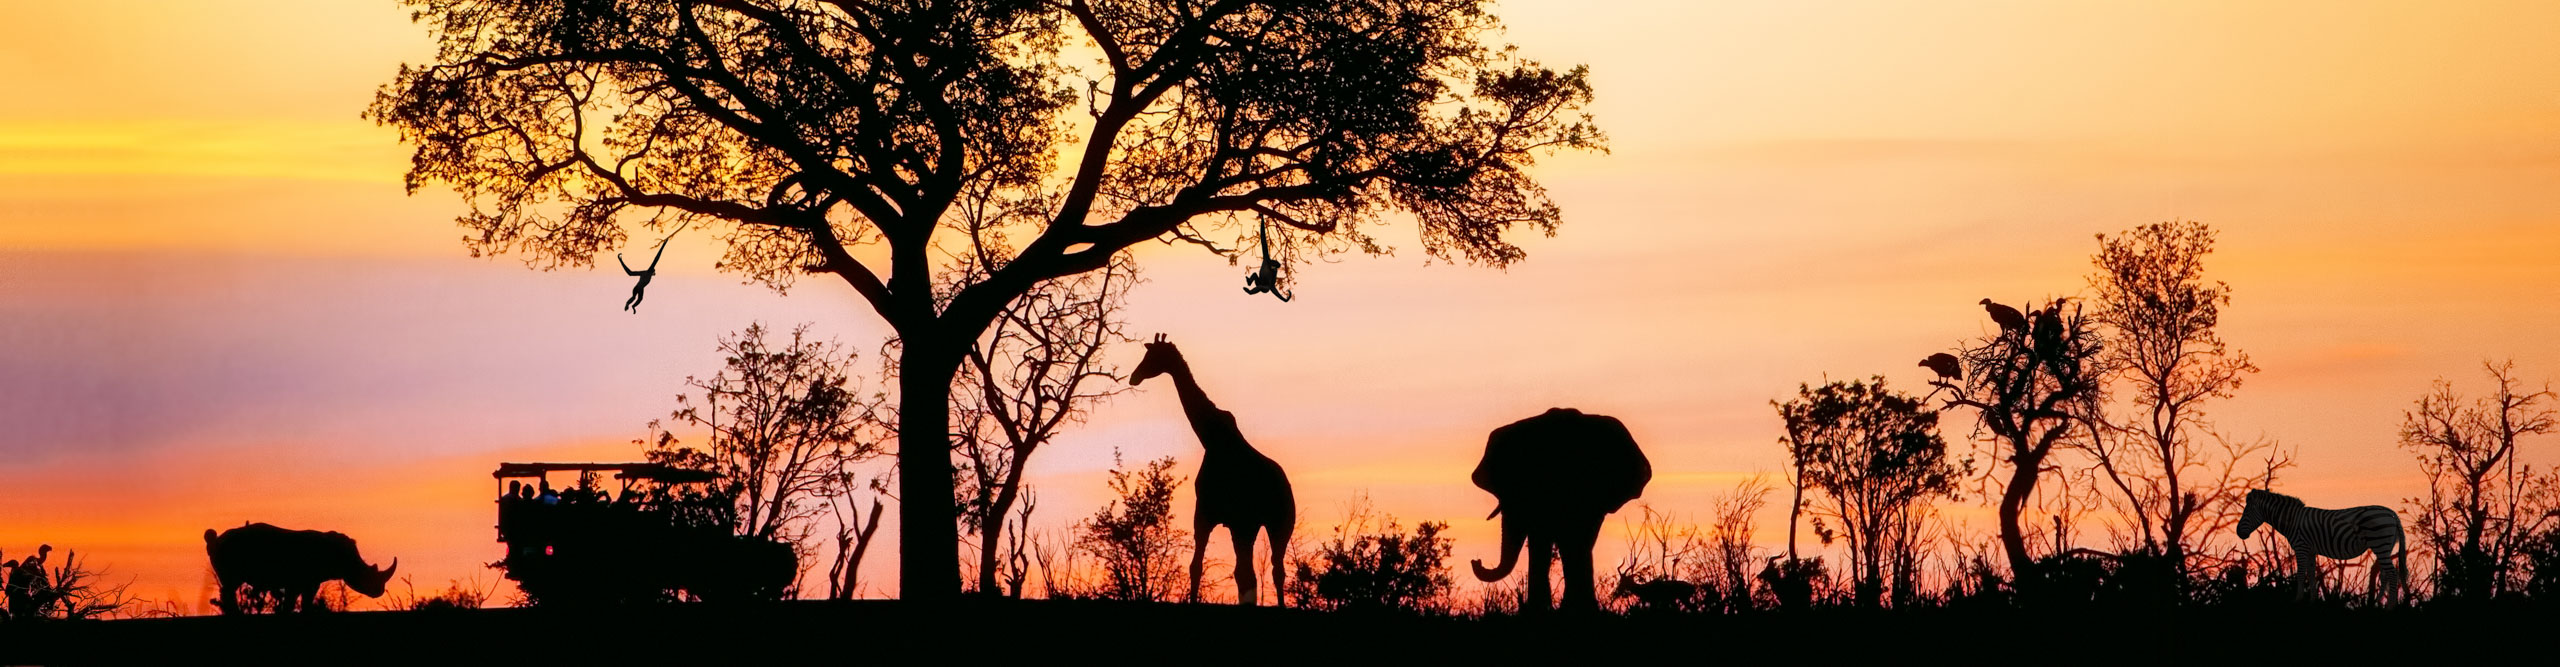 Silhouette of African safari scene with giraffe, elephant, rhino, and vehicle at sunset